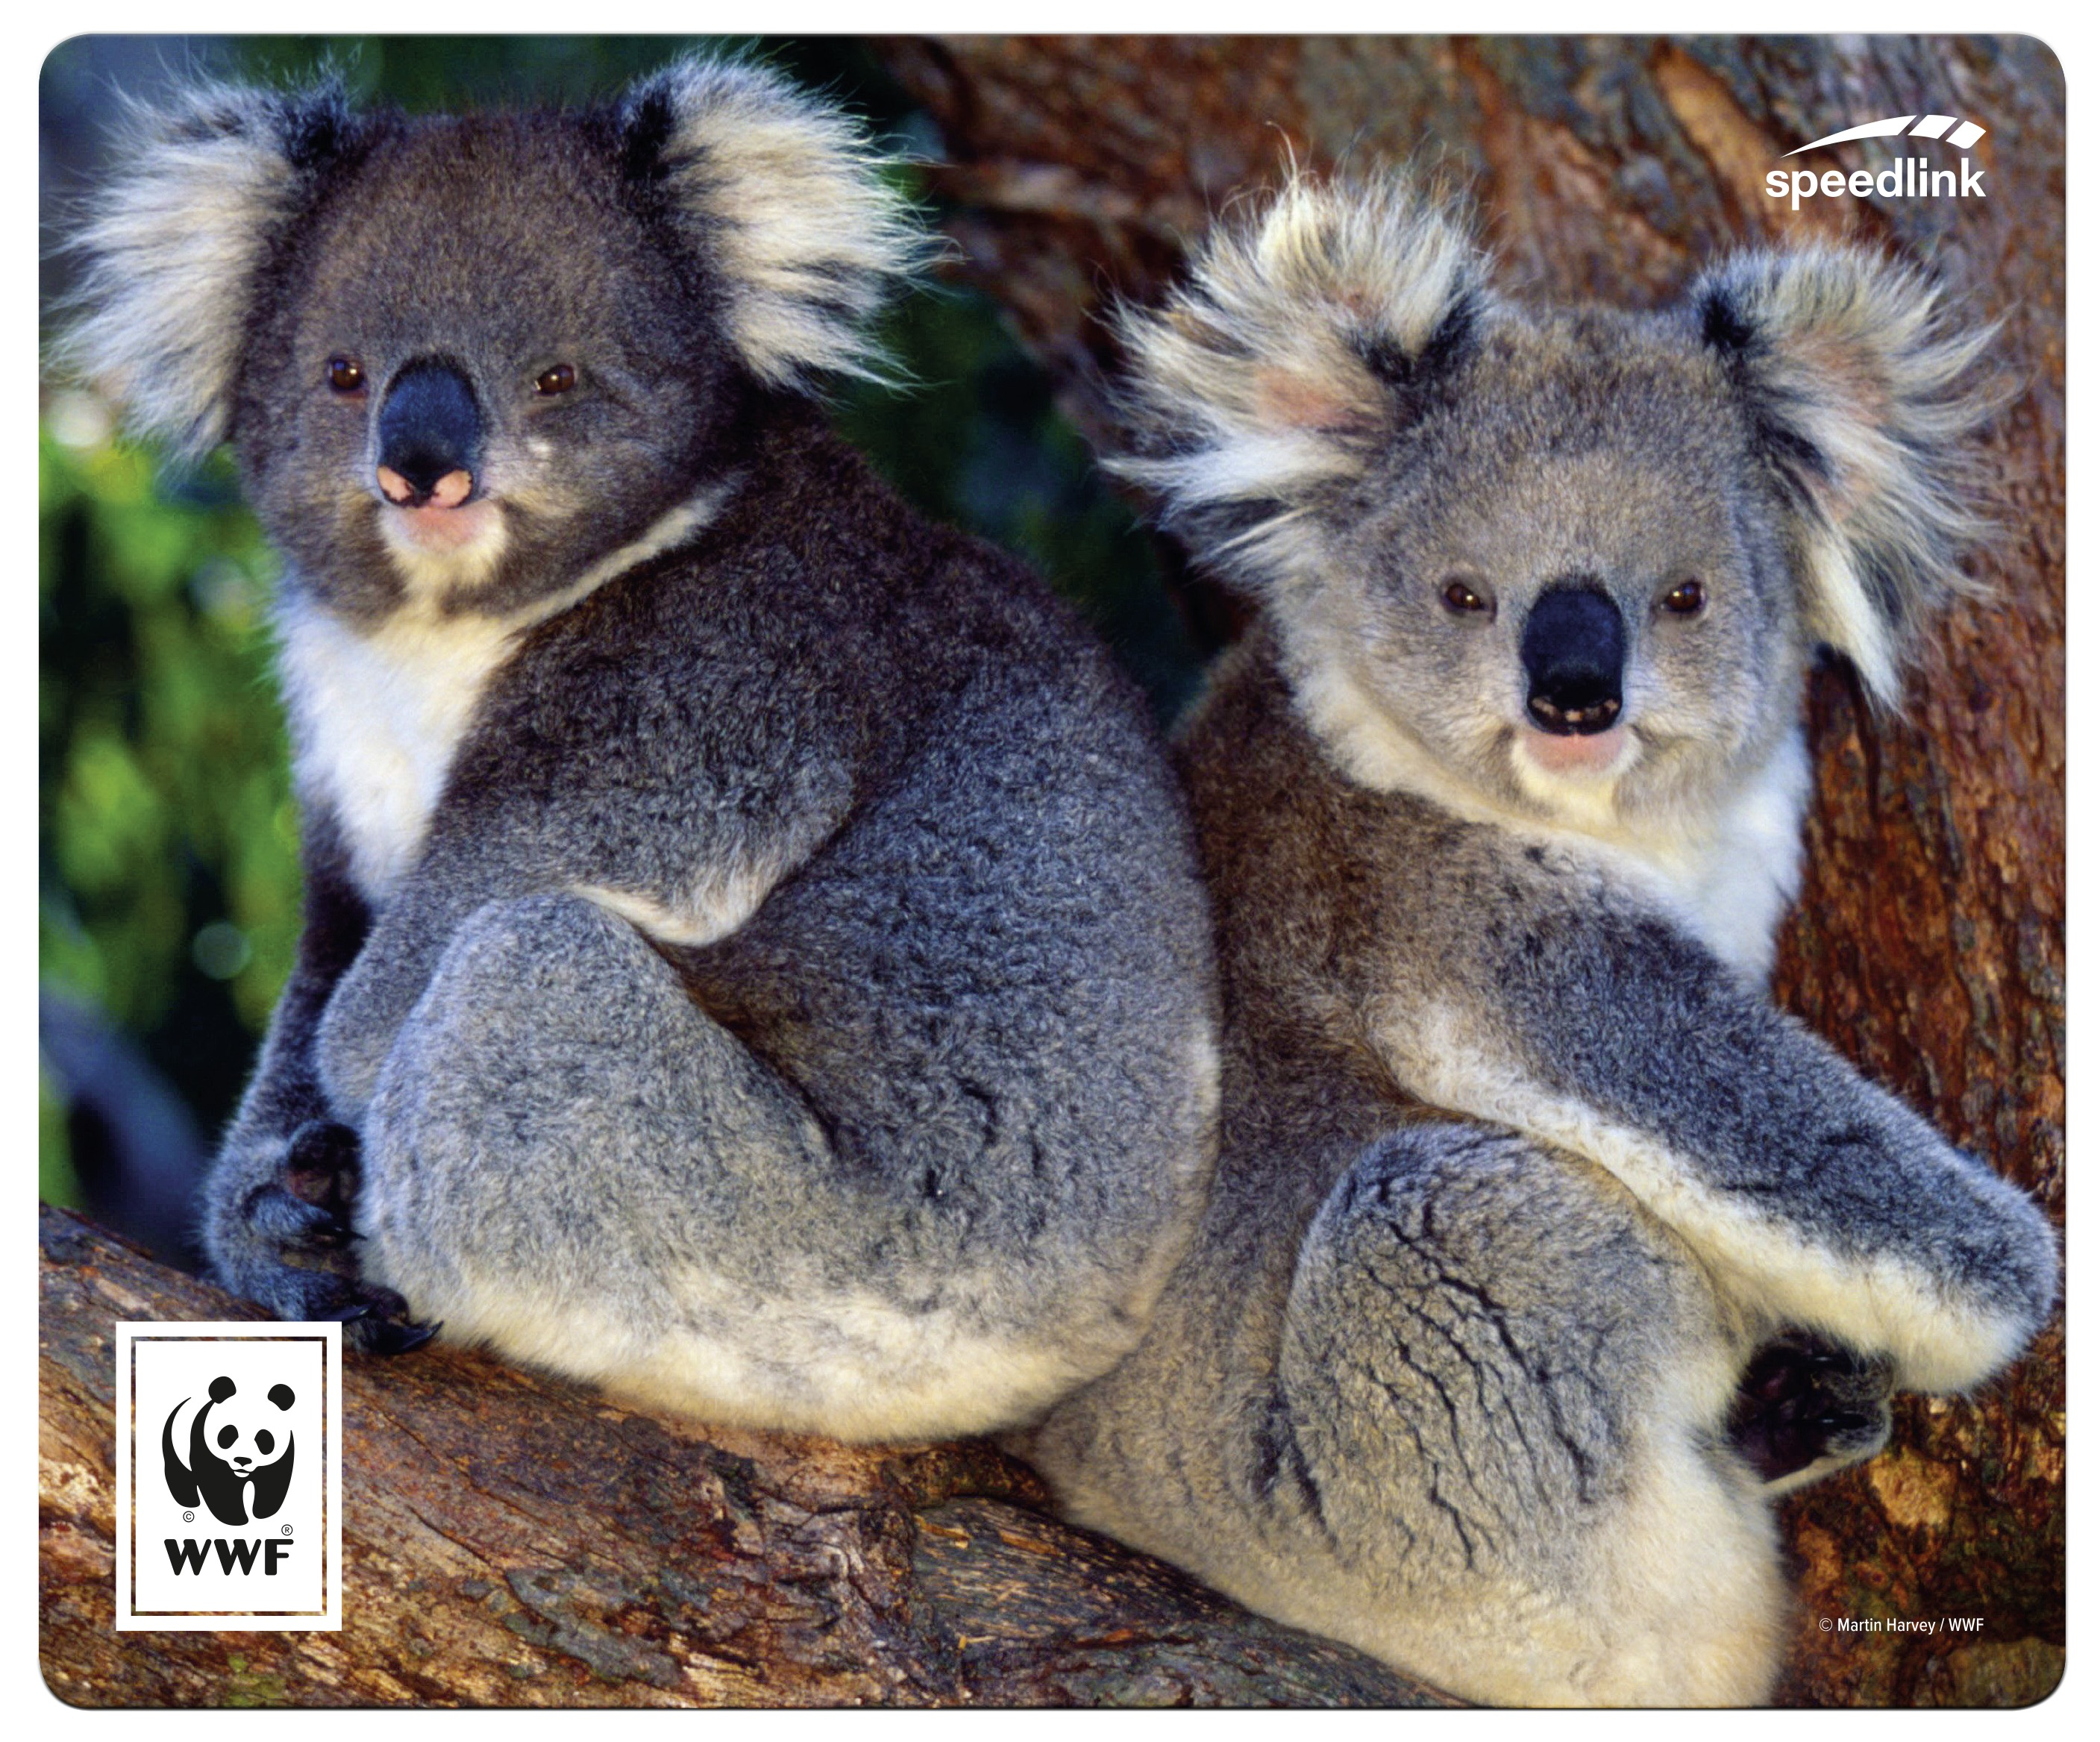 TERRA Mehrfarbig SPEEDLINK Koala, WWF